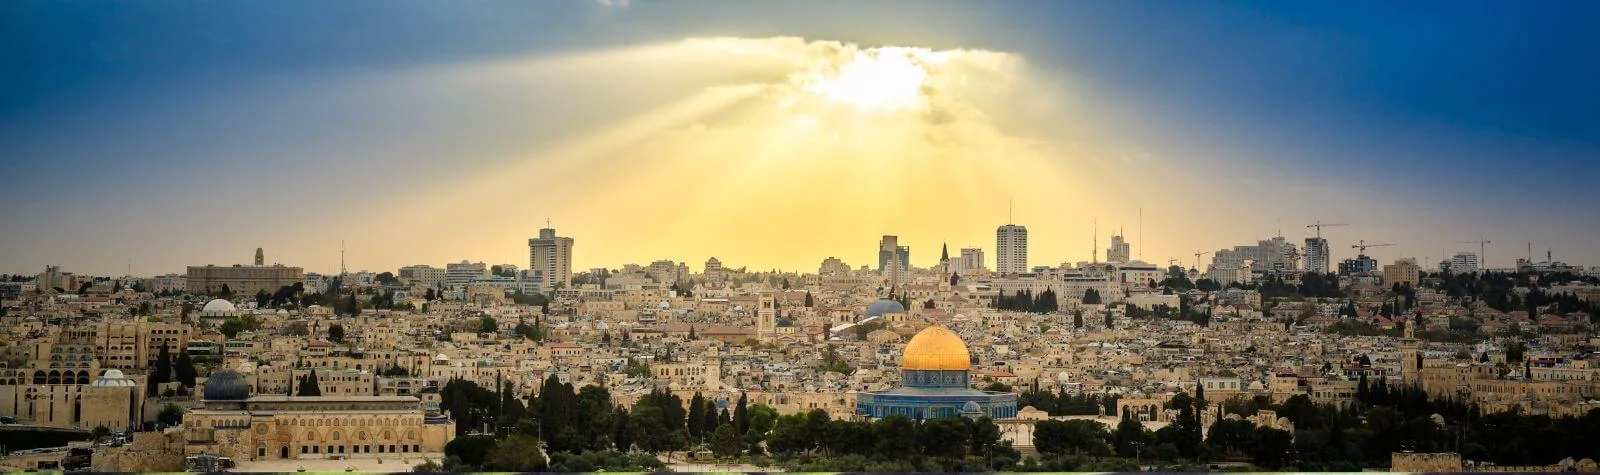 Luxury Hotels Jerusalem: Where Opulence Meets History